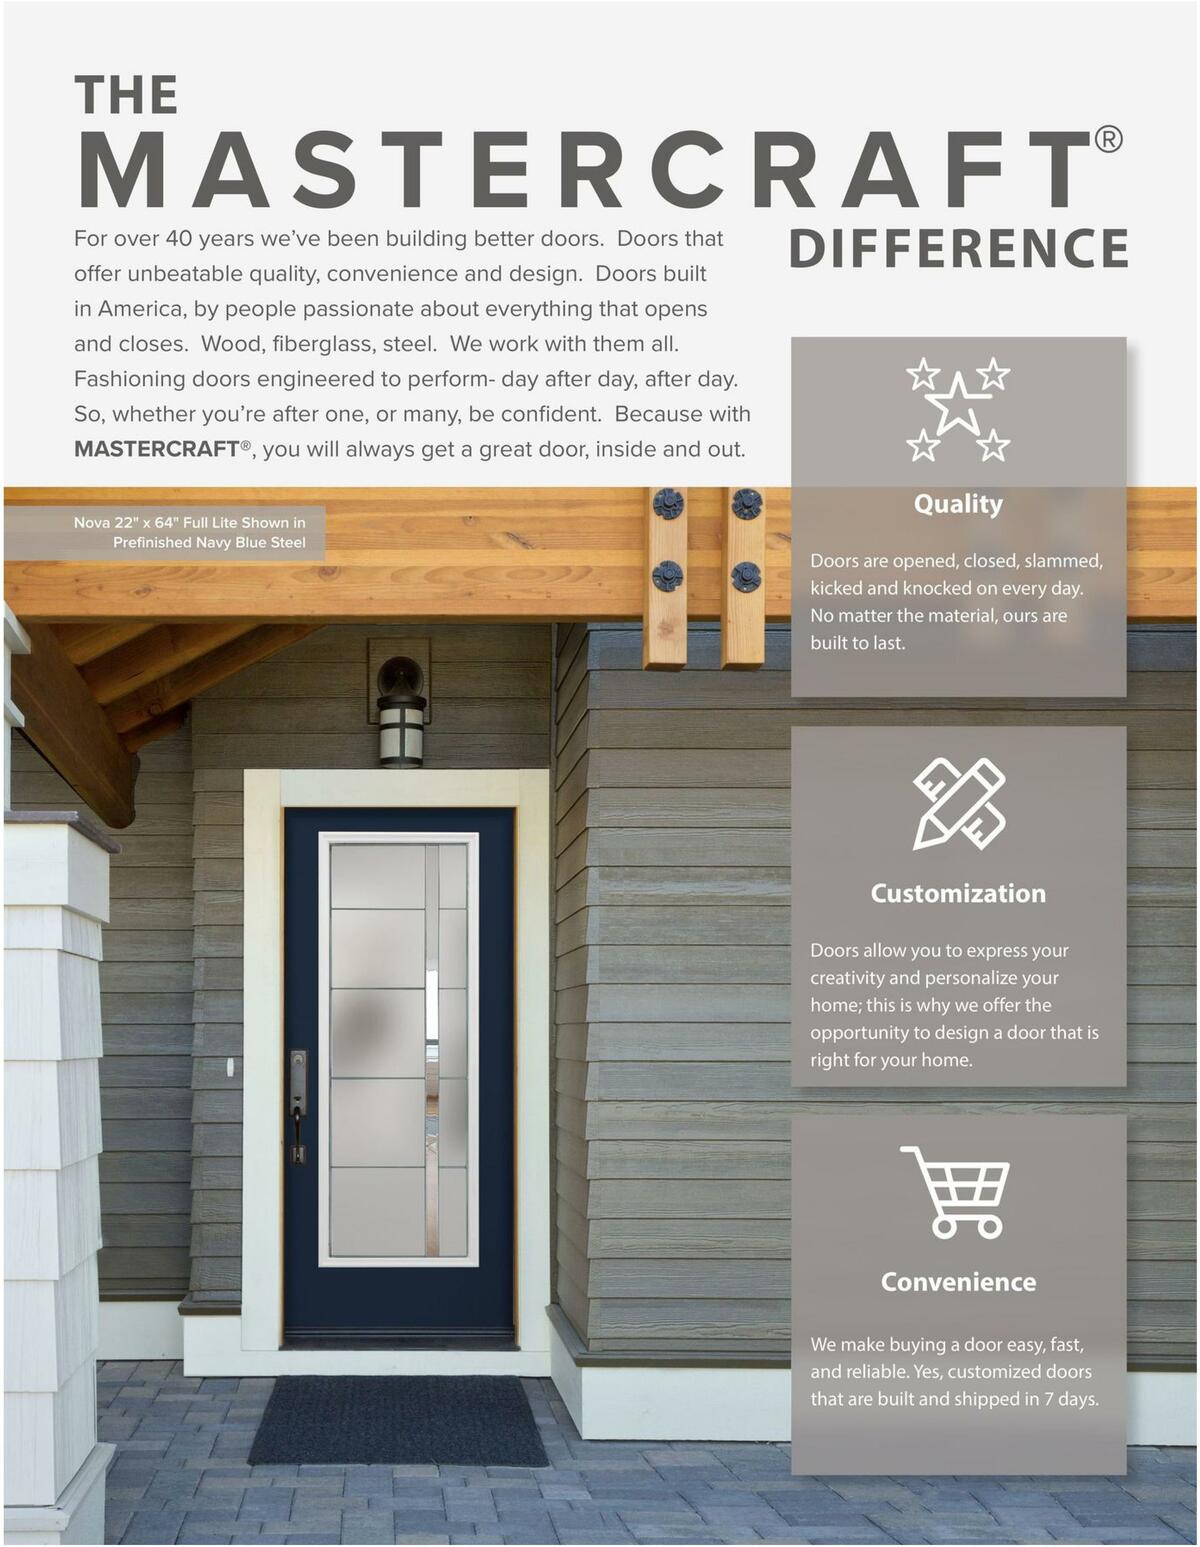 Menards MASTERCRAFT Exterior Doors Weekly Ad from June 14